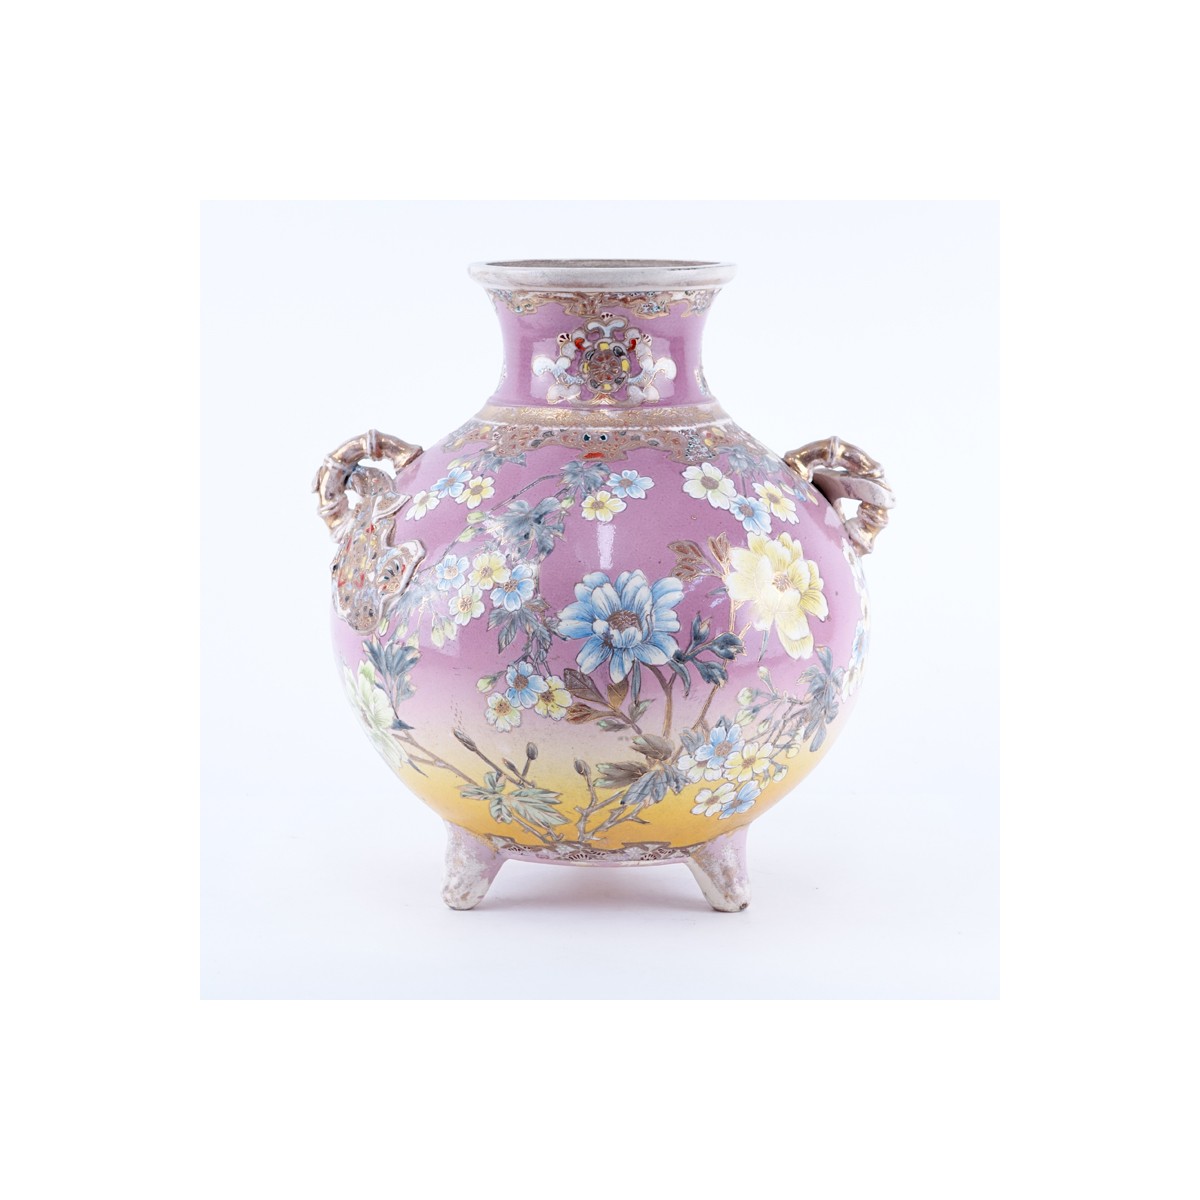 Antique Japanese Nippon Hand Painted Pottery Urn Vase. Signed. Mi